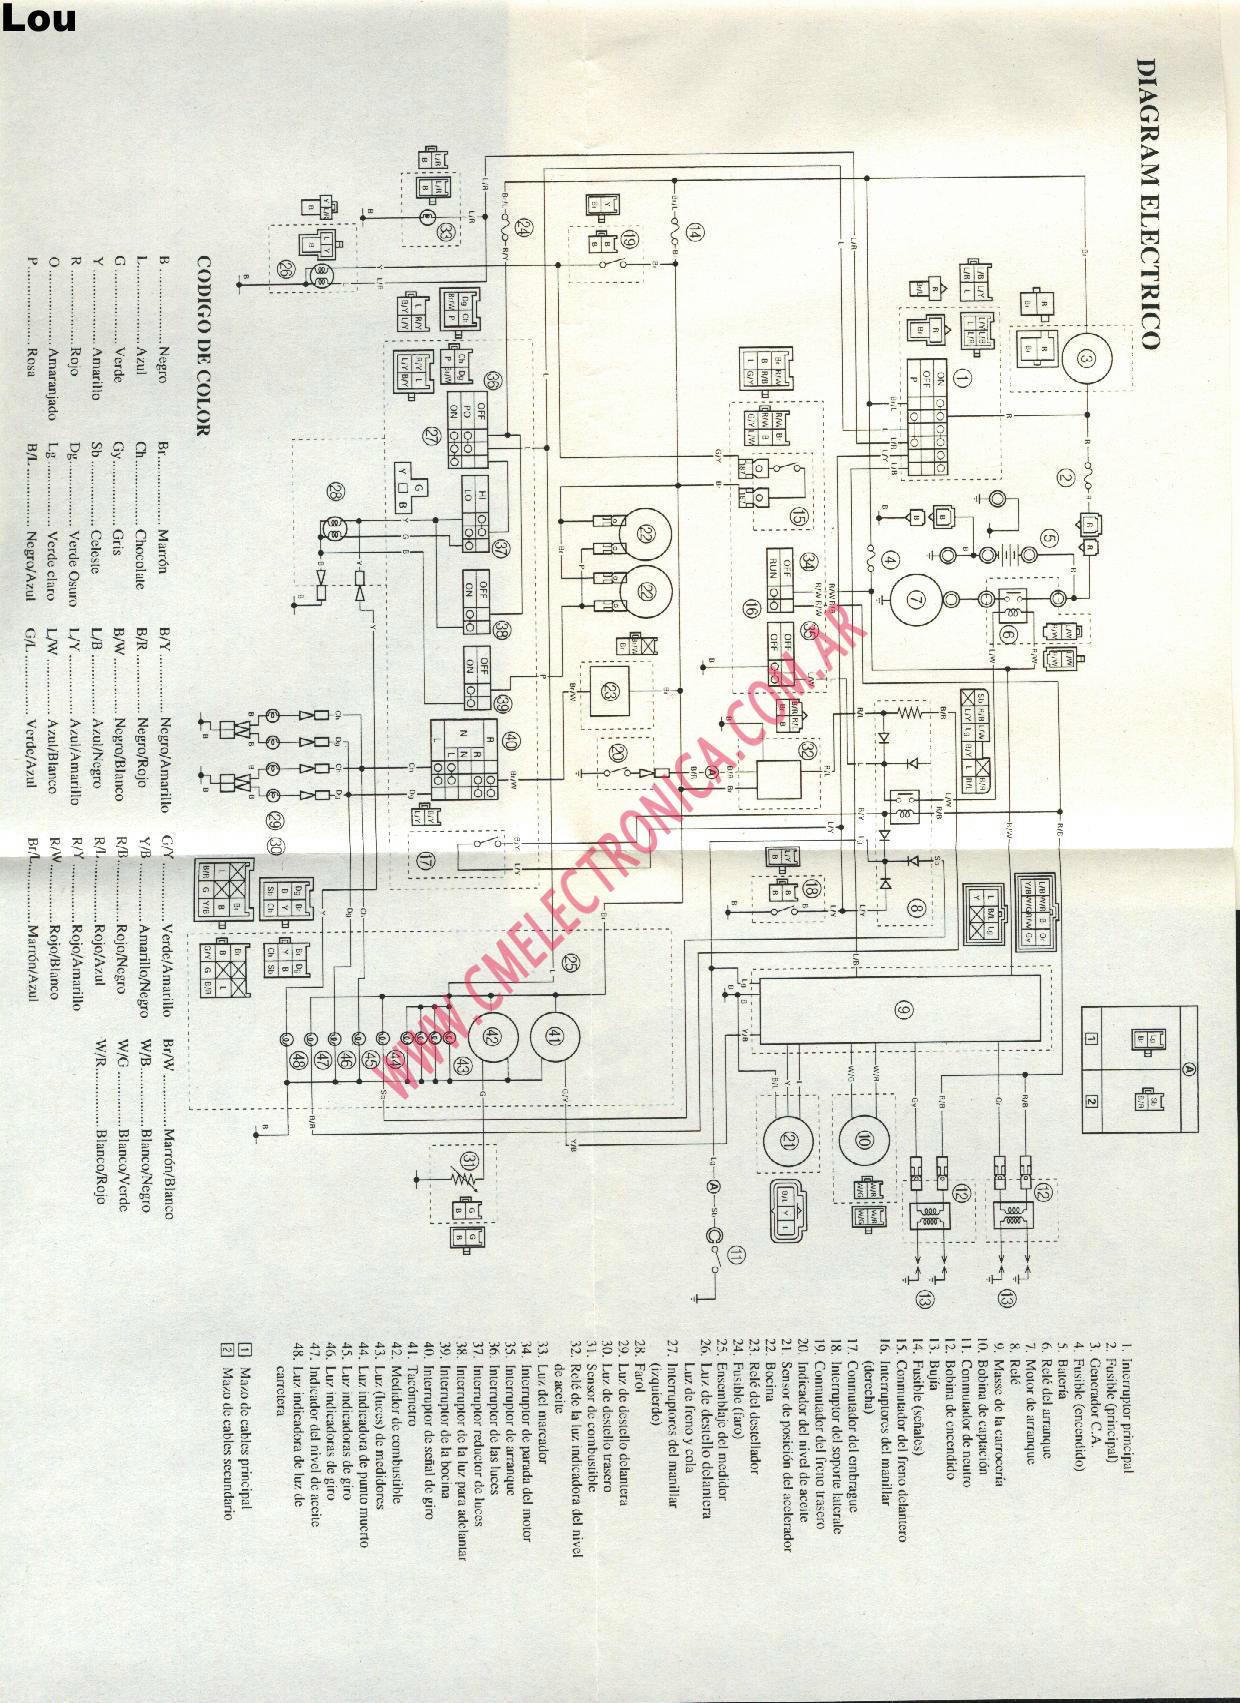 Diagrama yamaha xjr1200 benelli wiring diagram 